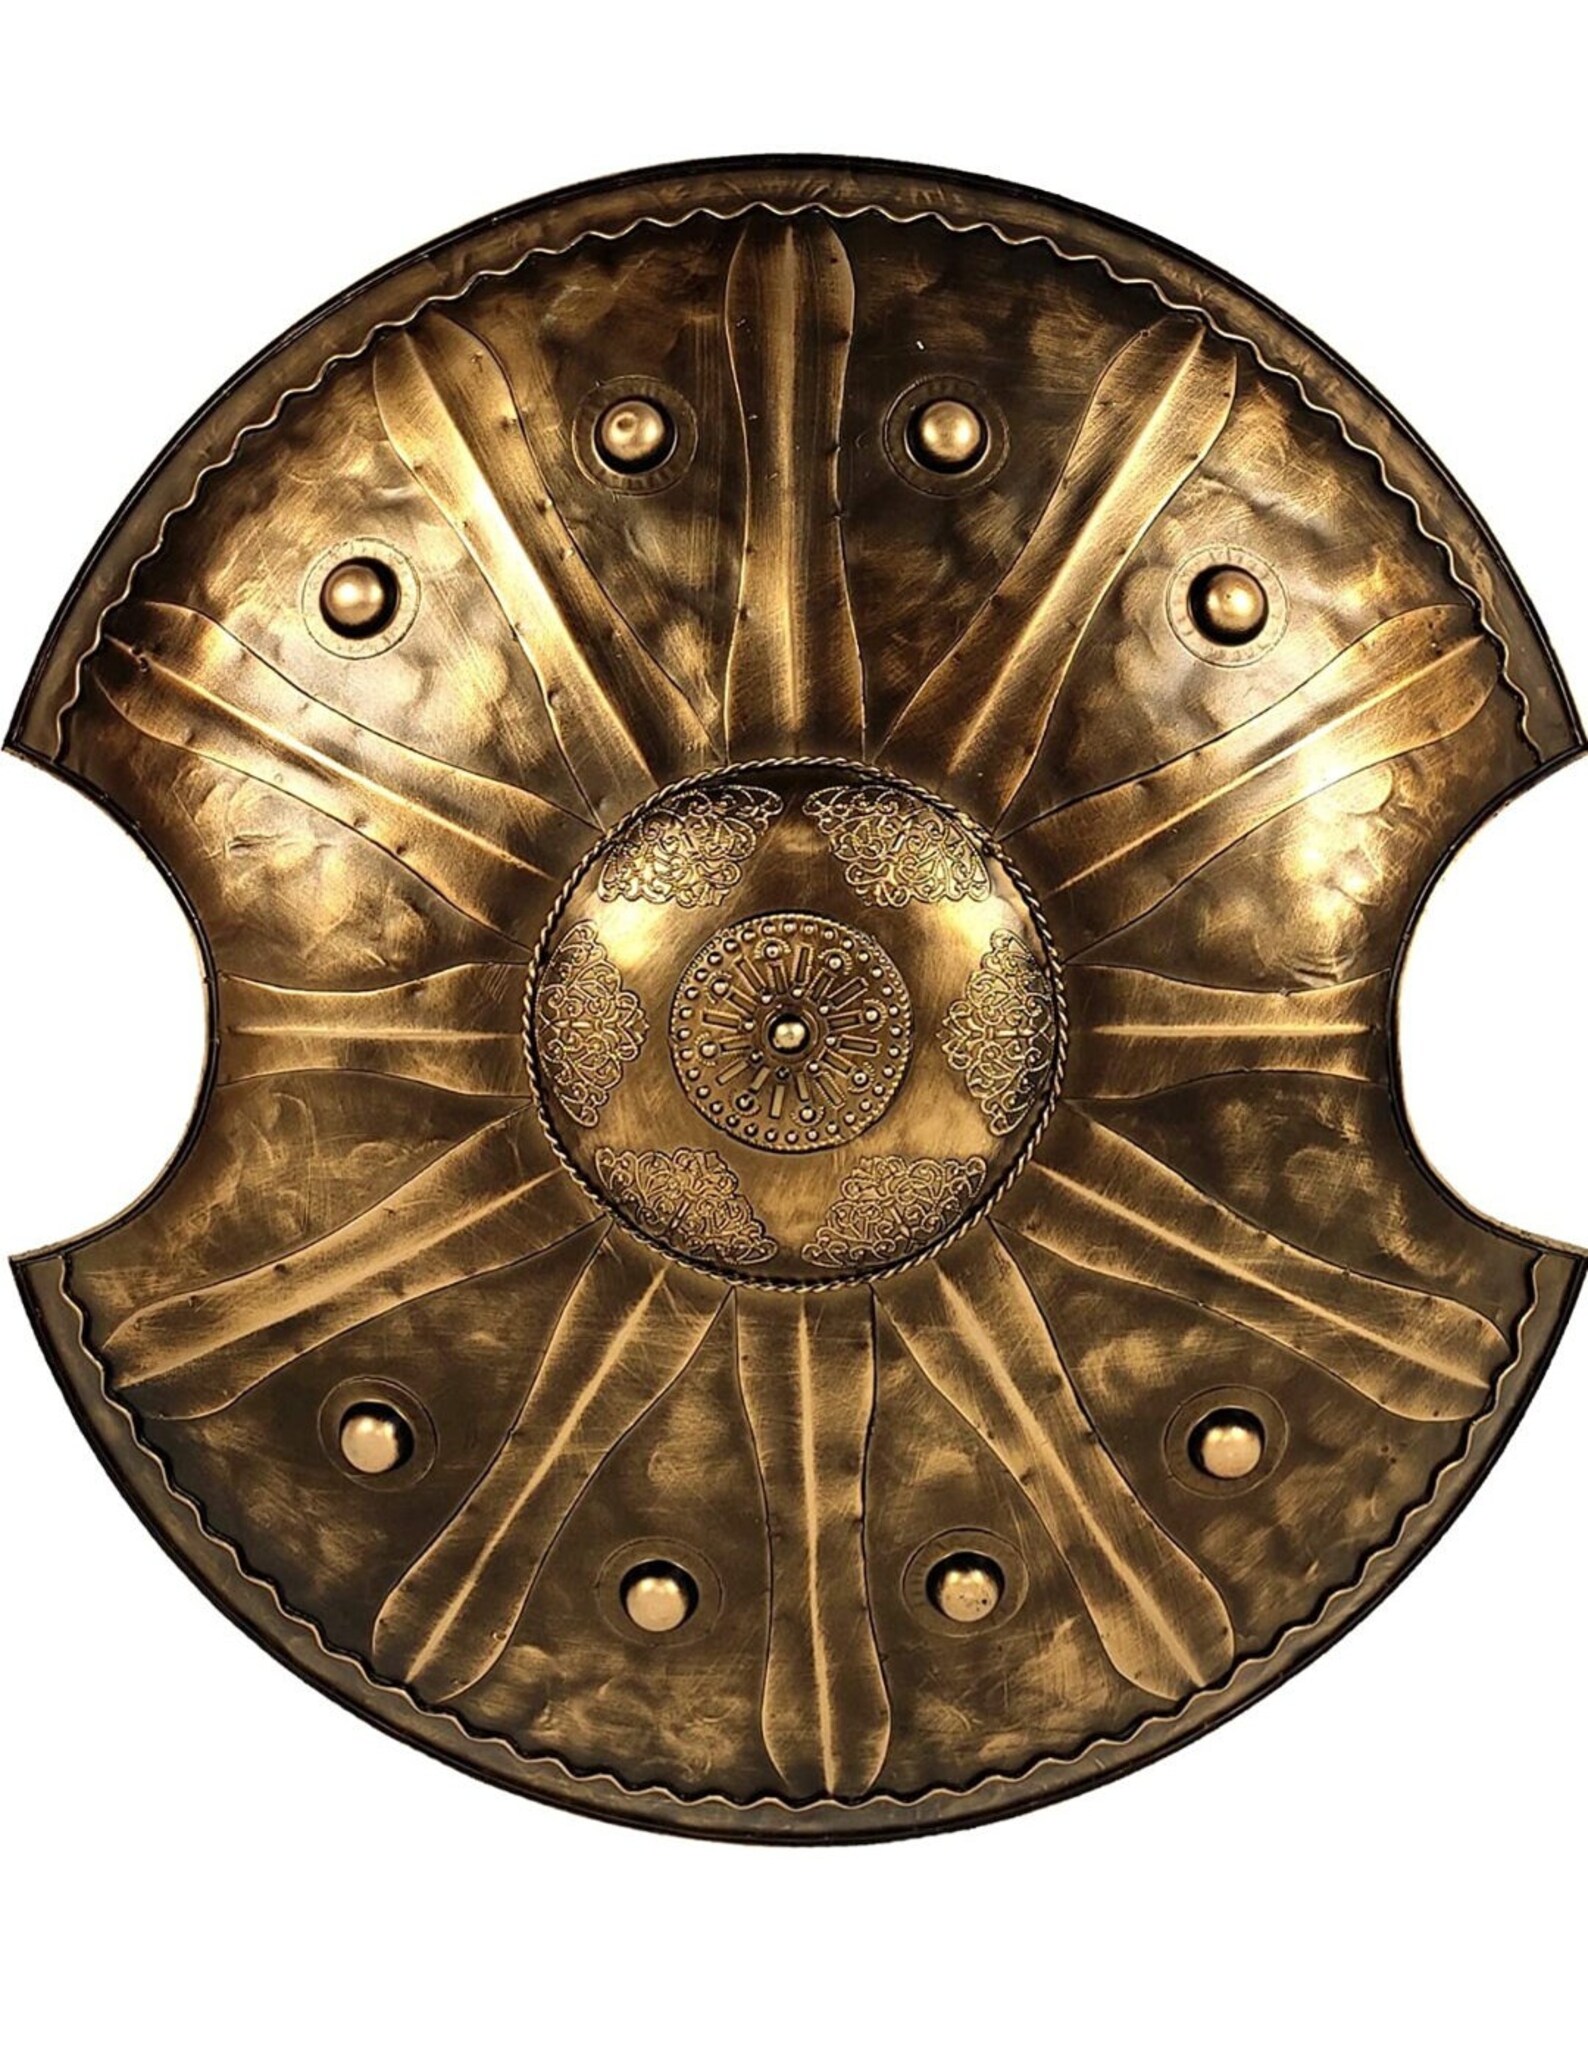 Troy Trojan War Shield Ancient Greek Shield Handcrafted Metal | Etsy